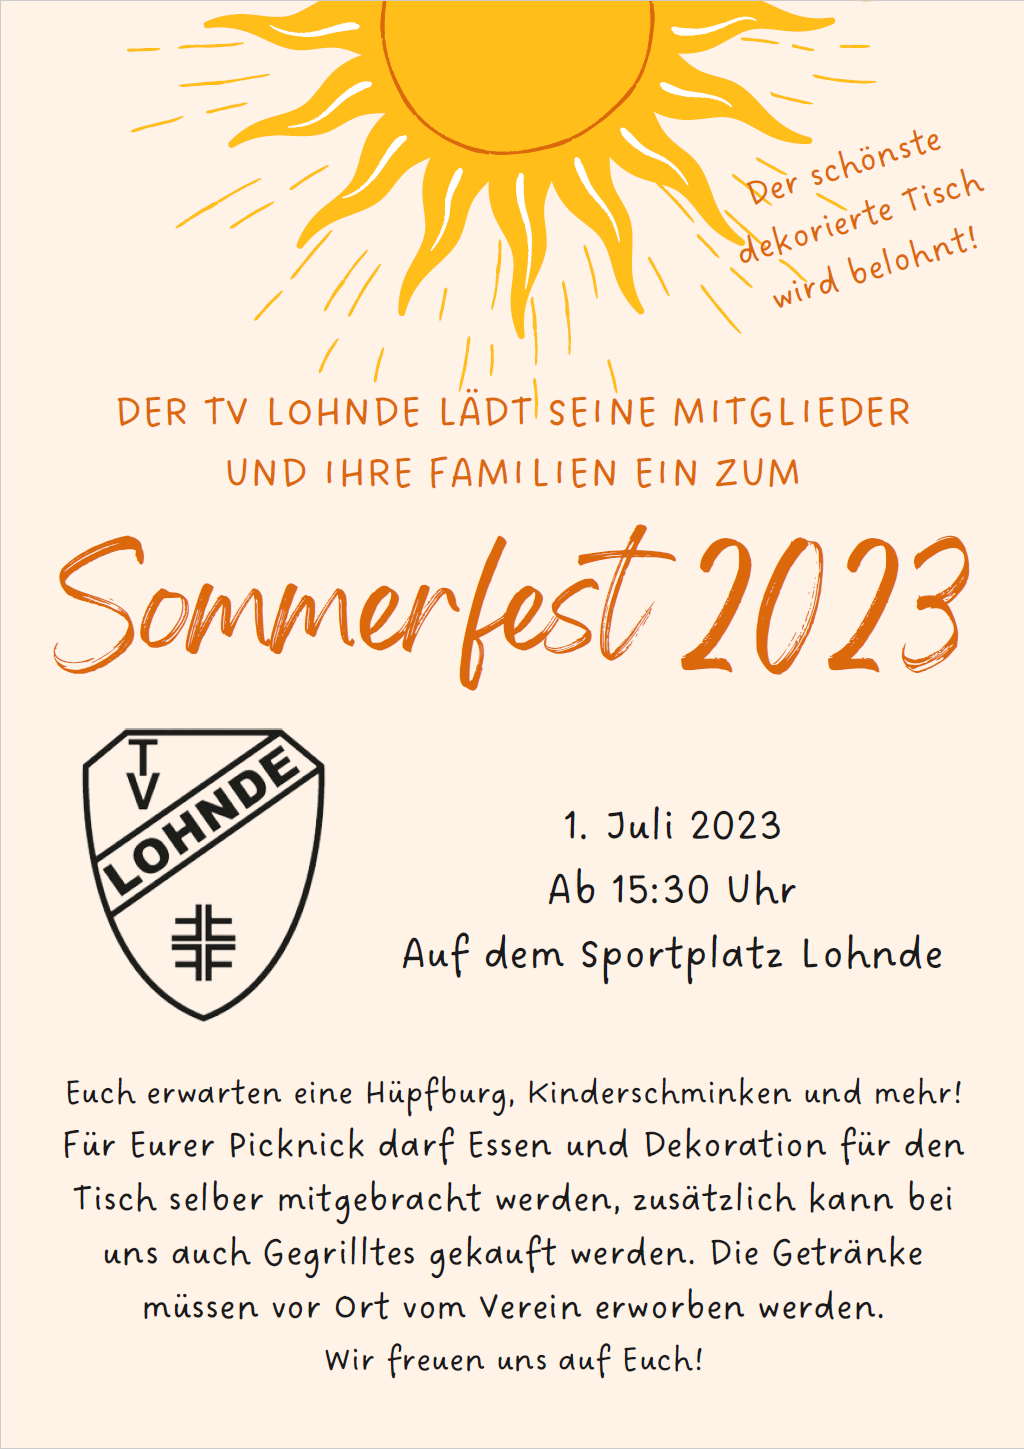 2023 06 26 17 10 23 TVL Sommerfest 2023 Adobe Acrobat Reader 64 bit